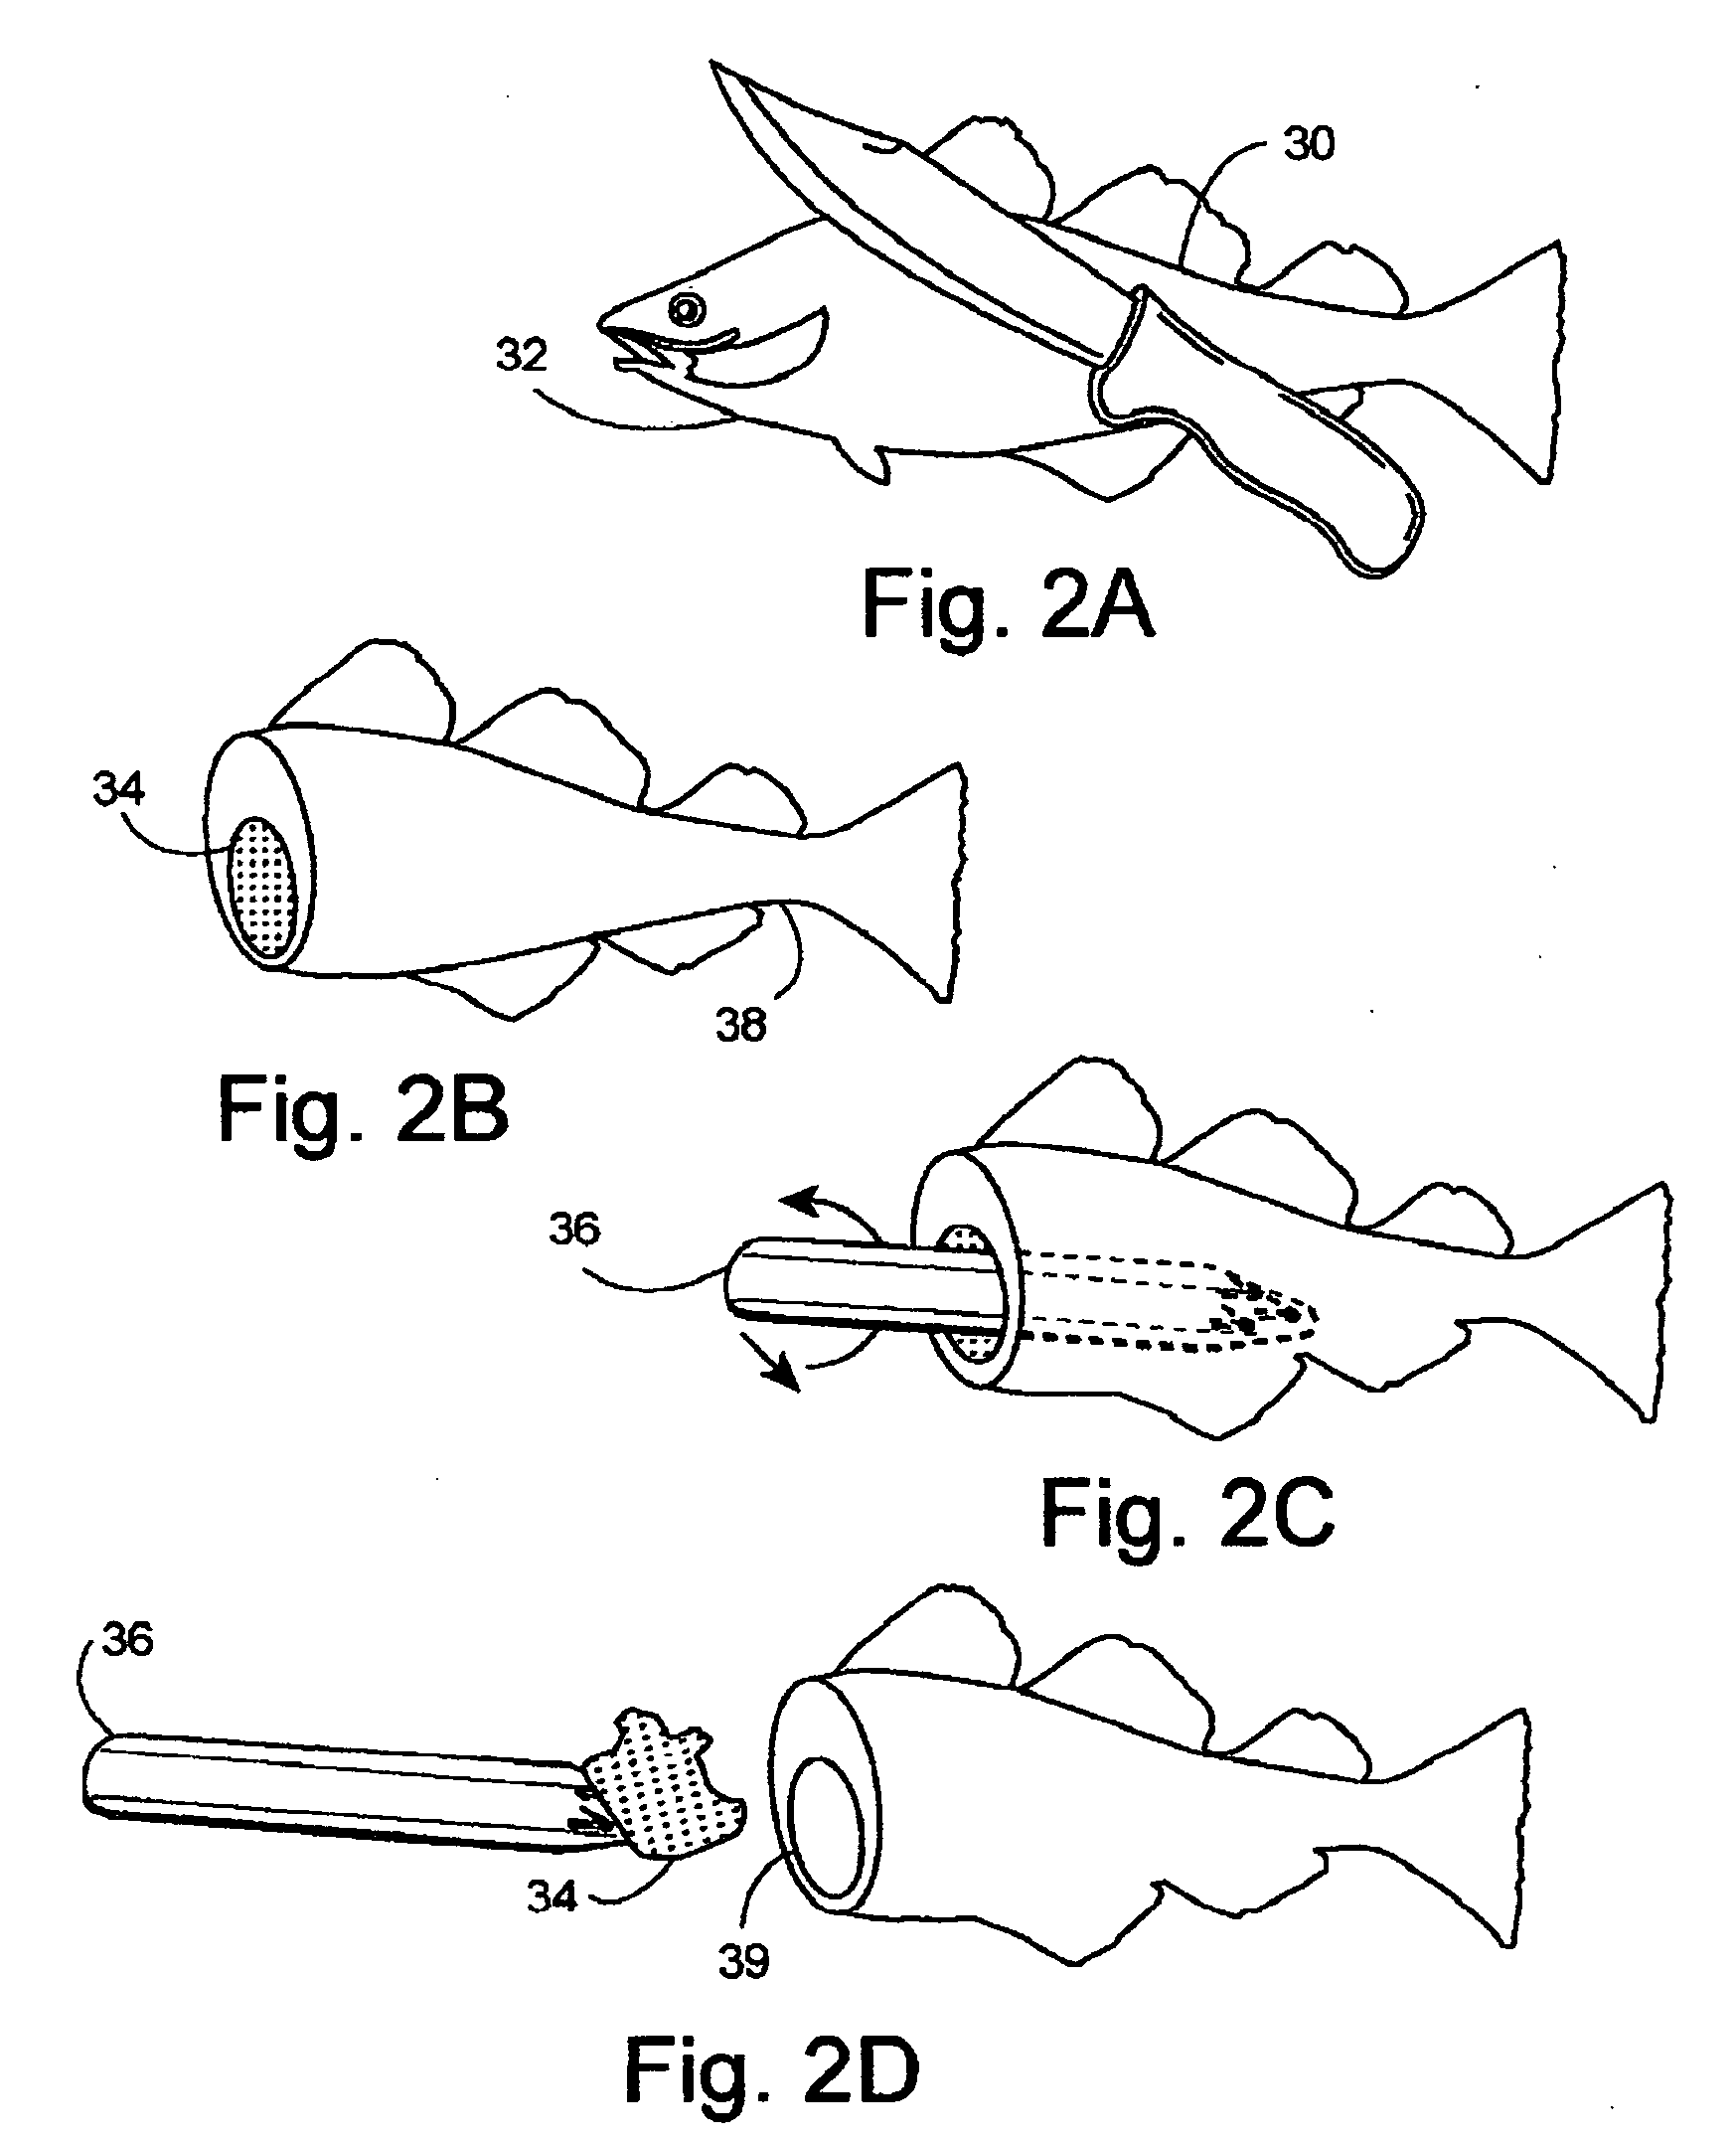 Instrument and method for preparing plug-cut bait